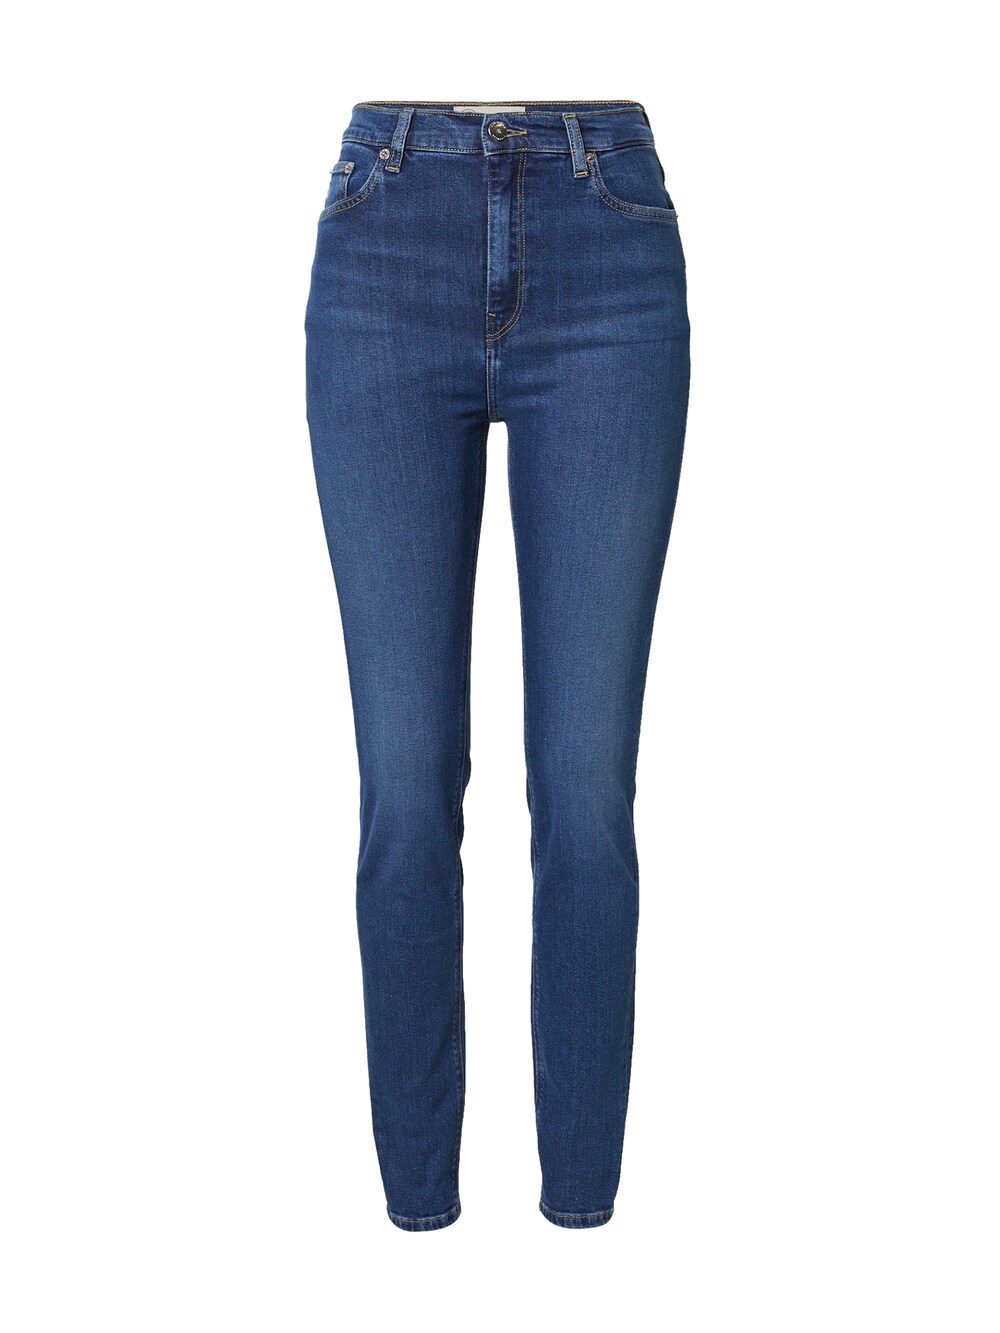 Узкие джинсы Mud Jeans, синий широкие джинсы mud jeans sara синий